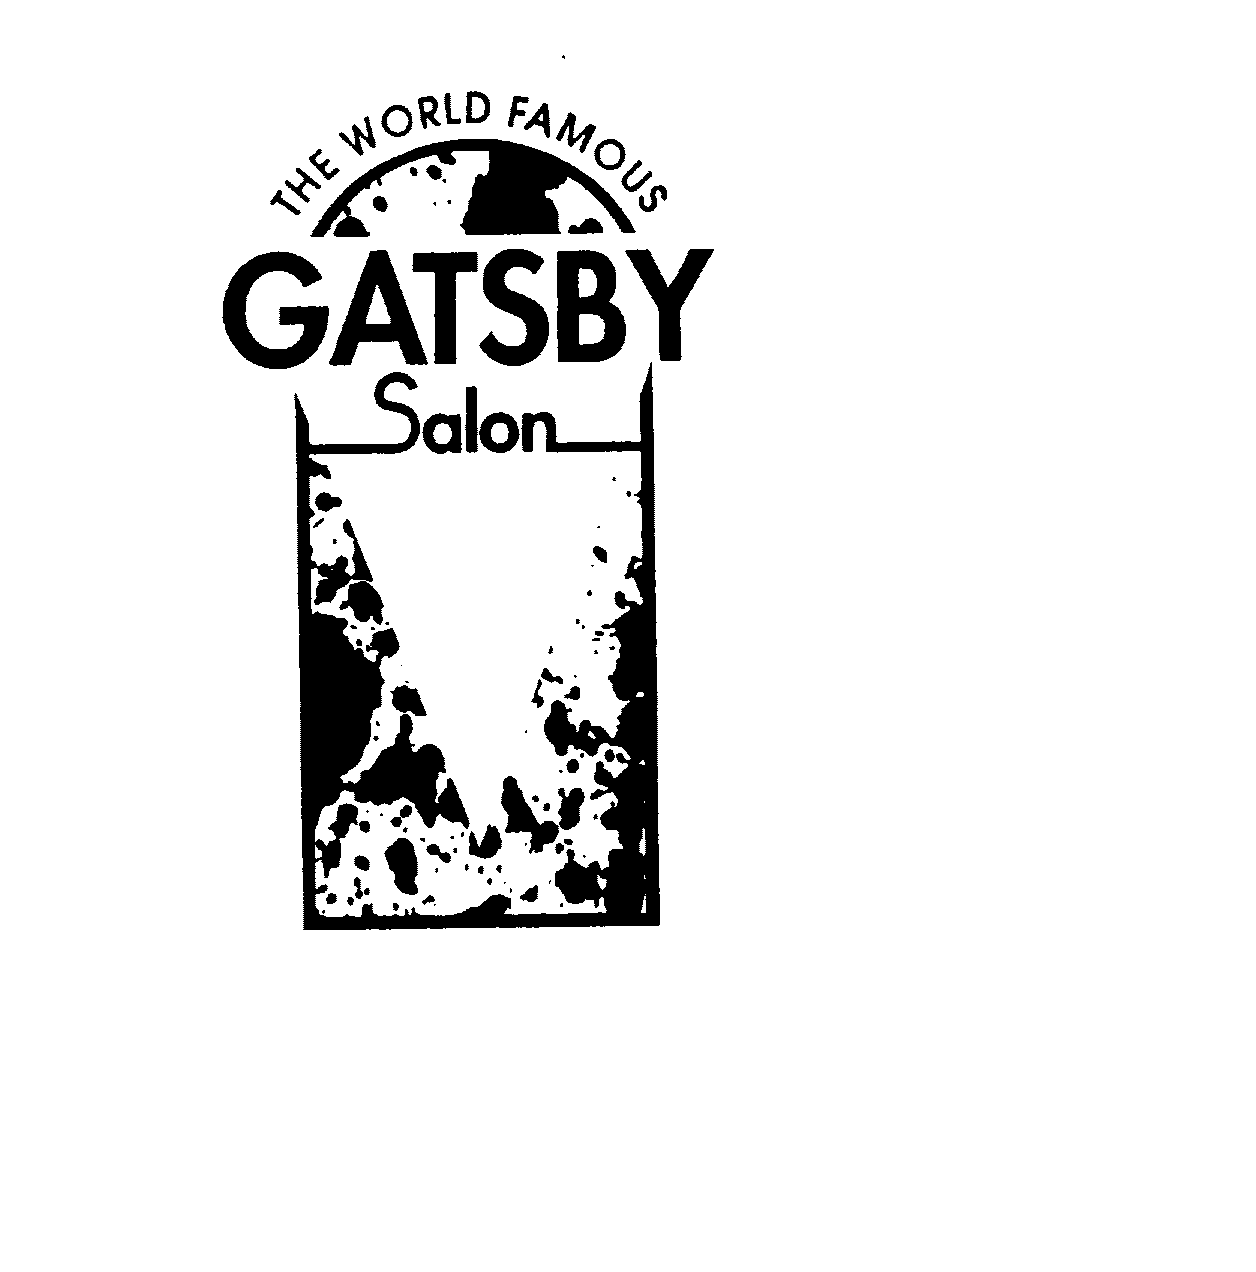  THE WORLD FAMOUS GATSBY SALON